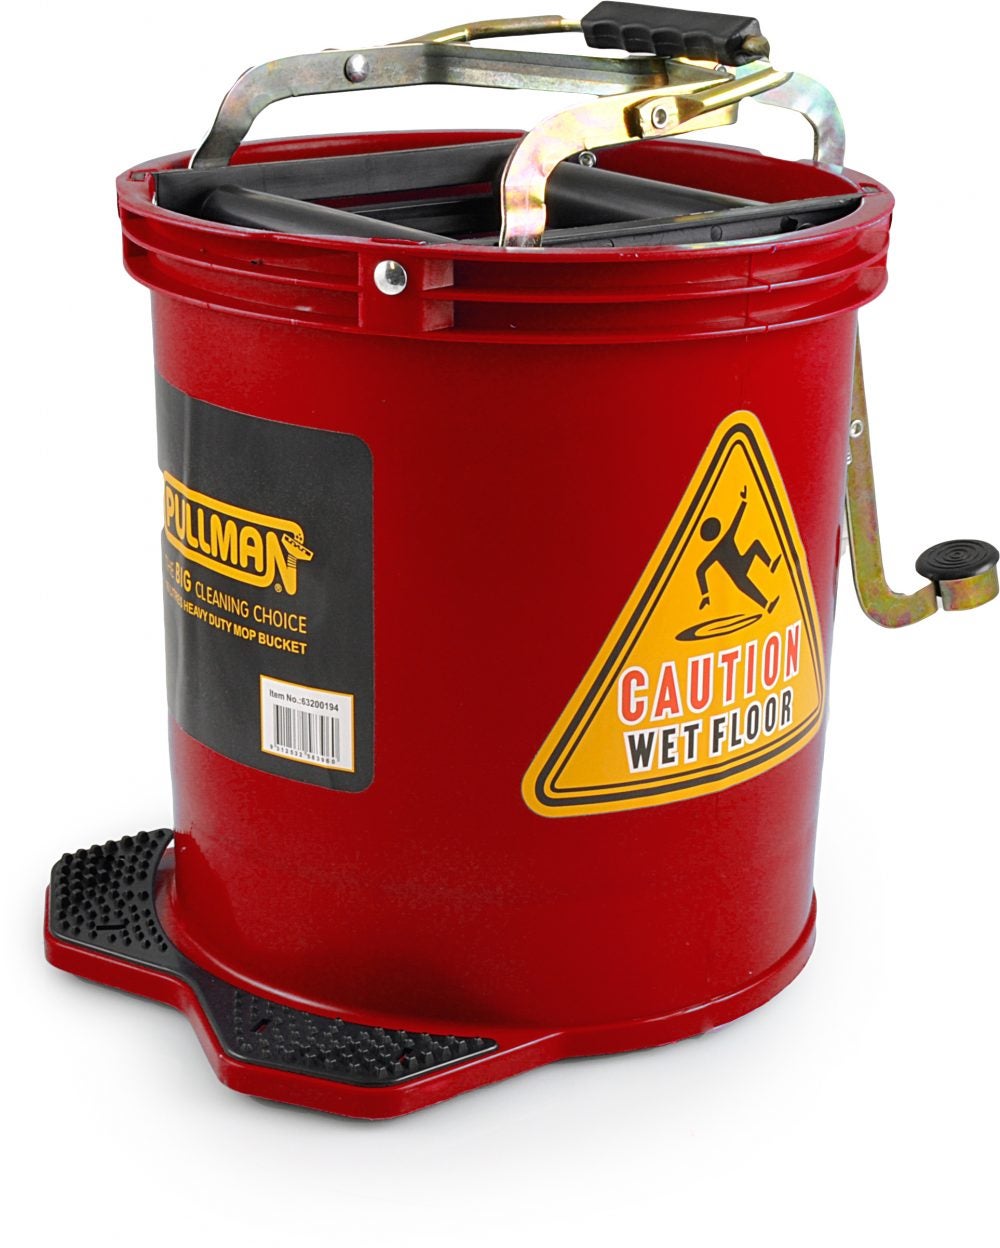 Wringer Bucket Heavy Duty 16 Liter Red Pullman